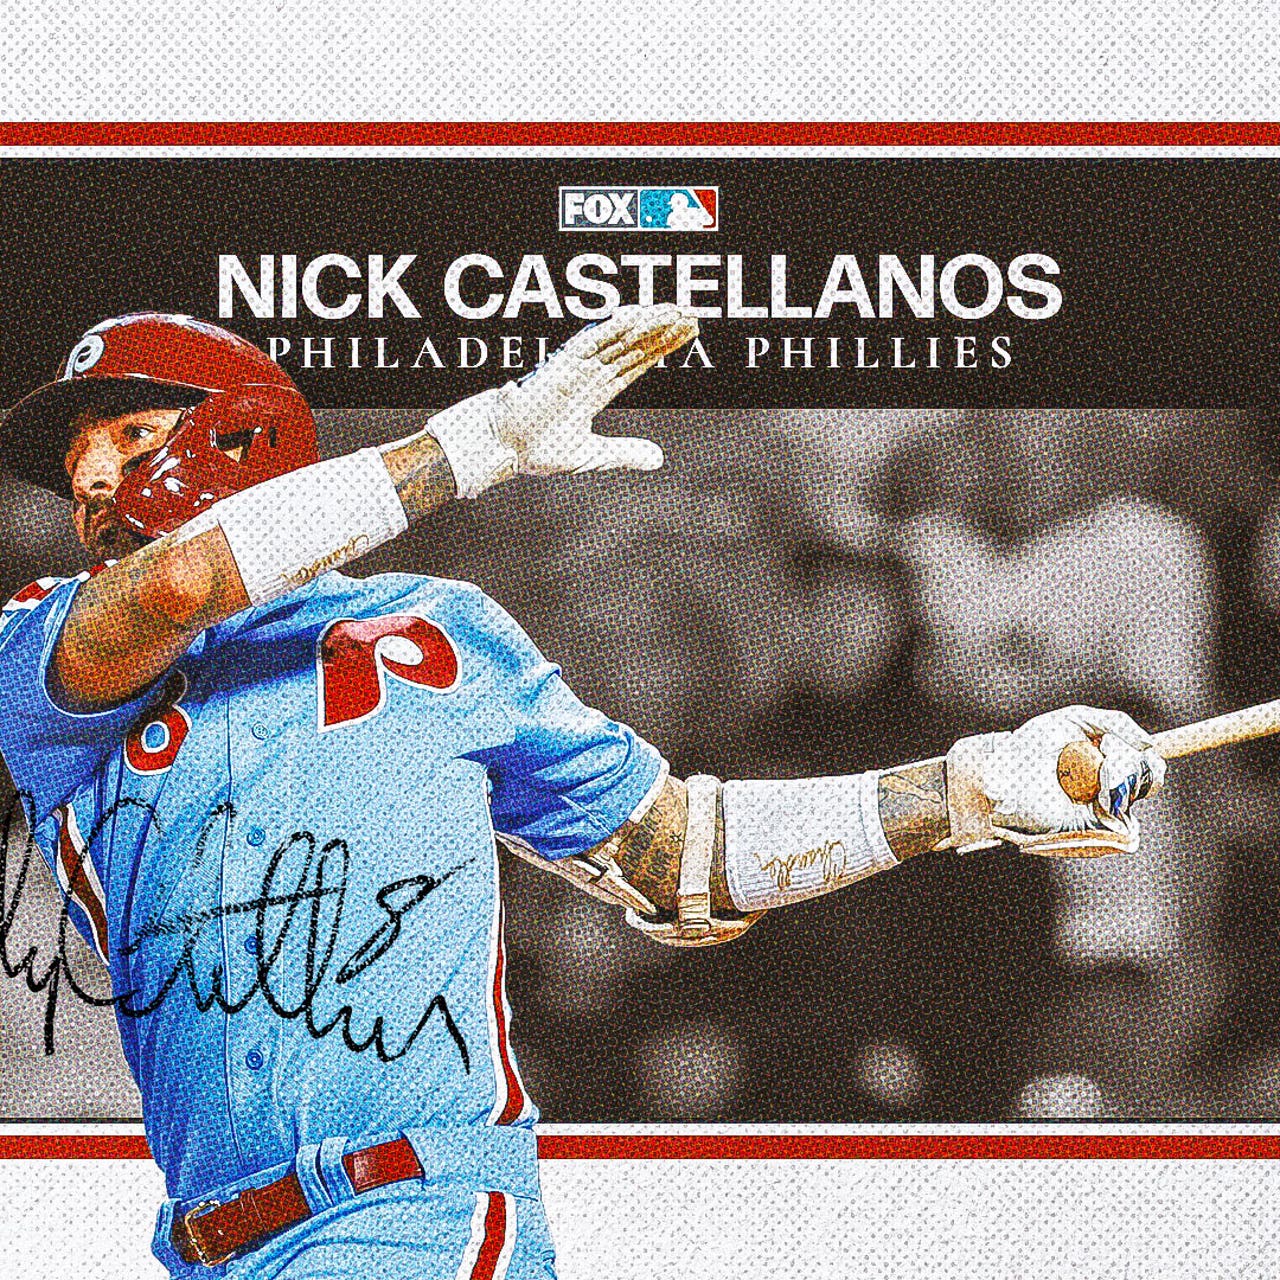 Take 2: Nick Castellanos, Phillies eliminate Braves again in NLDS